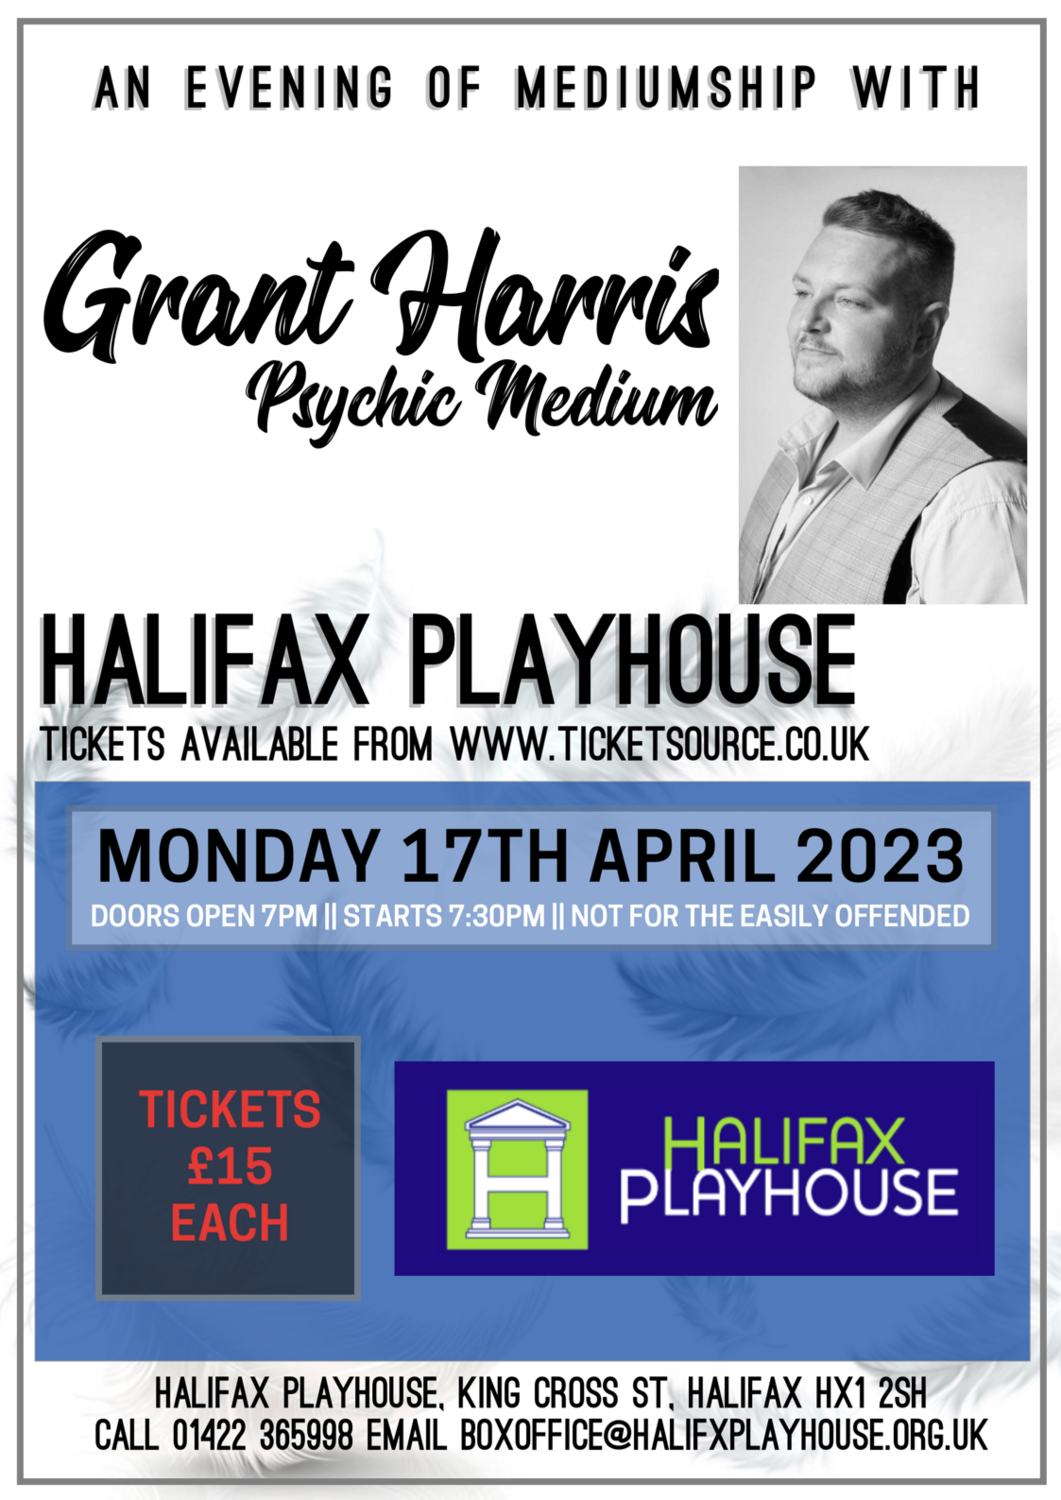 Halifax Playhouse, Halifax, Monday 17th April 2023